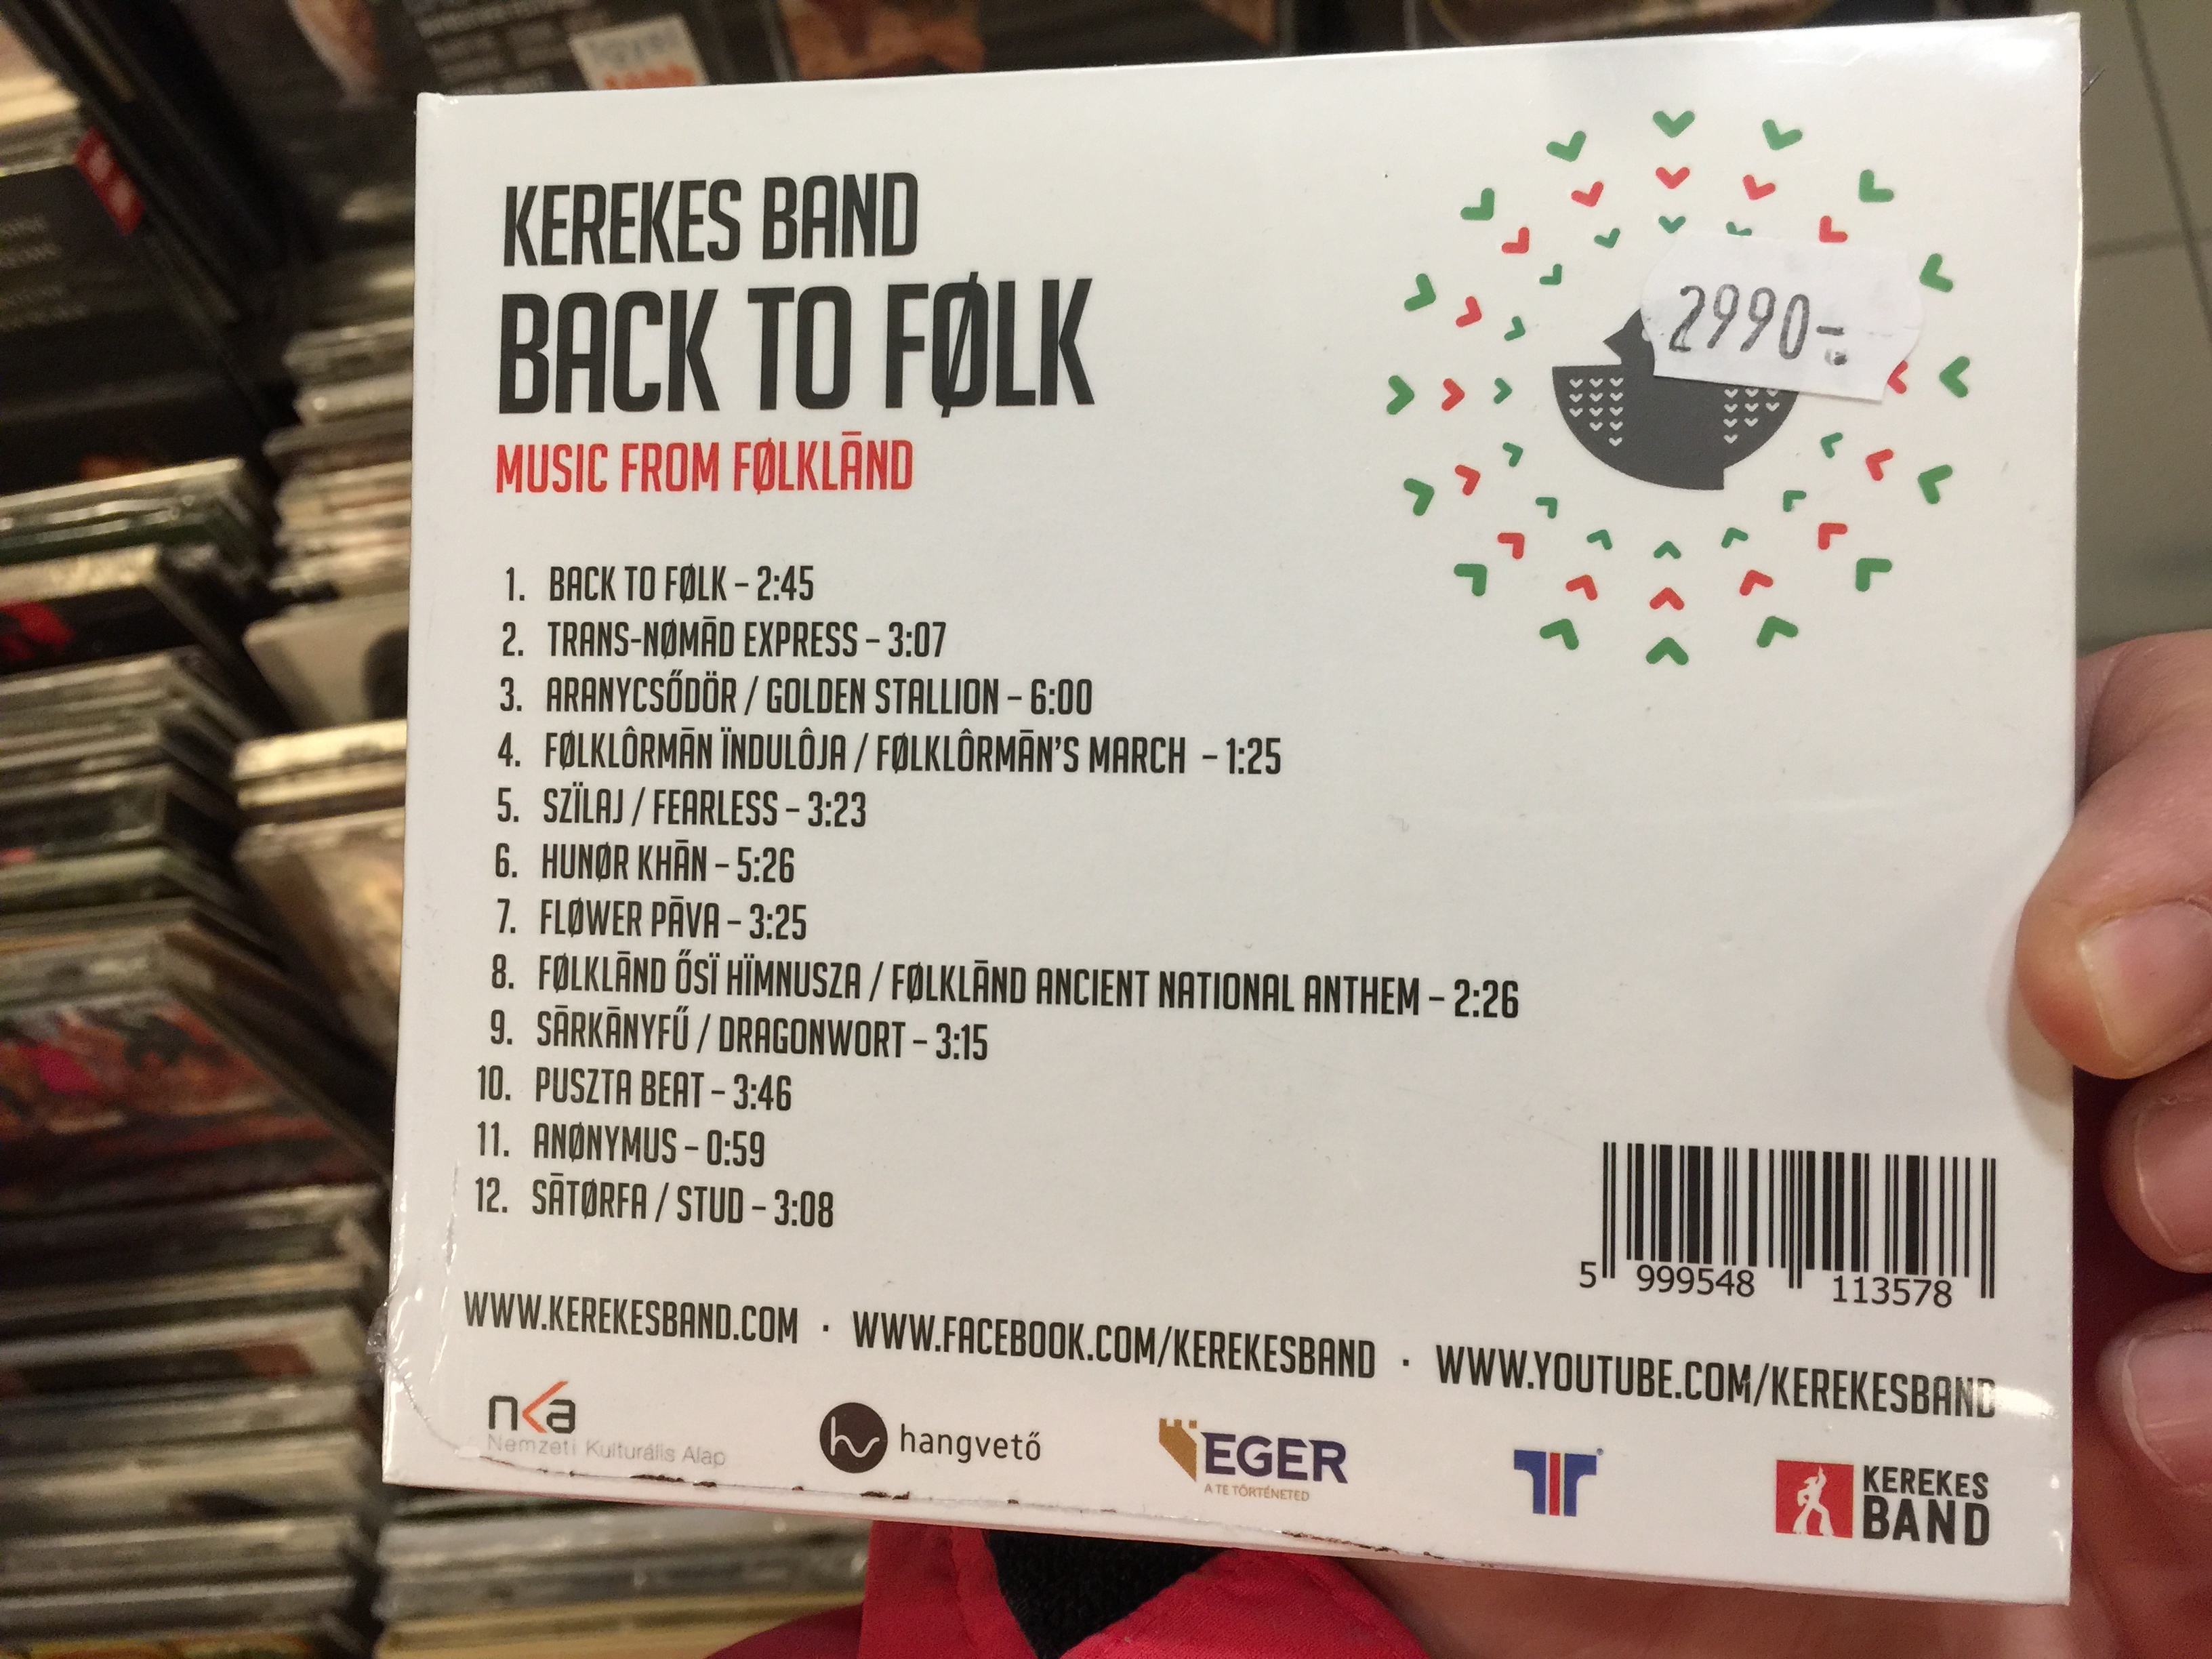 kerekes-band-back-to-f-lk-music-from-f-lkland-not-on-label-kerekes-band-self-released-audio-cd-2016-kb07-2-.jpg